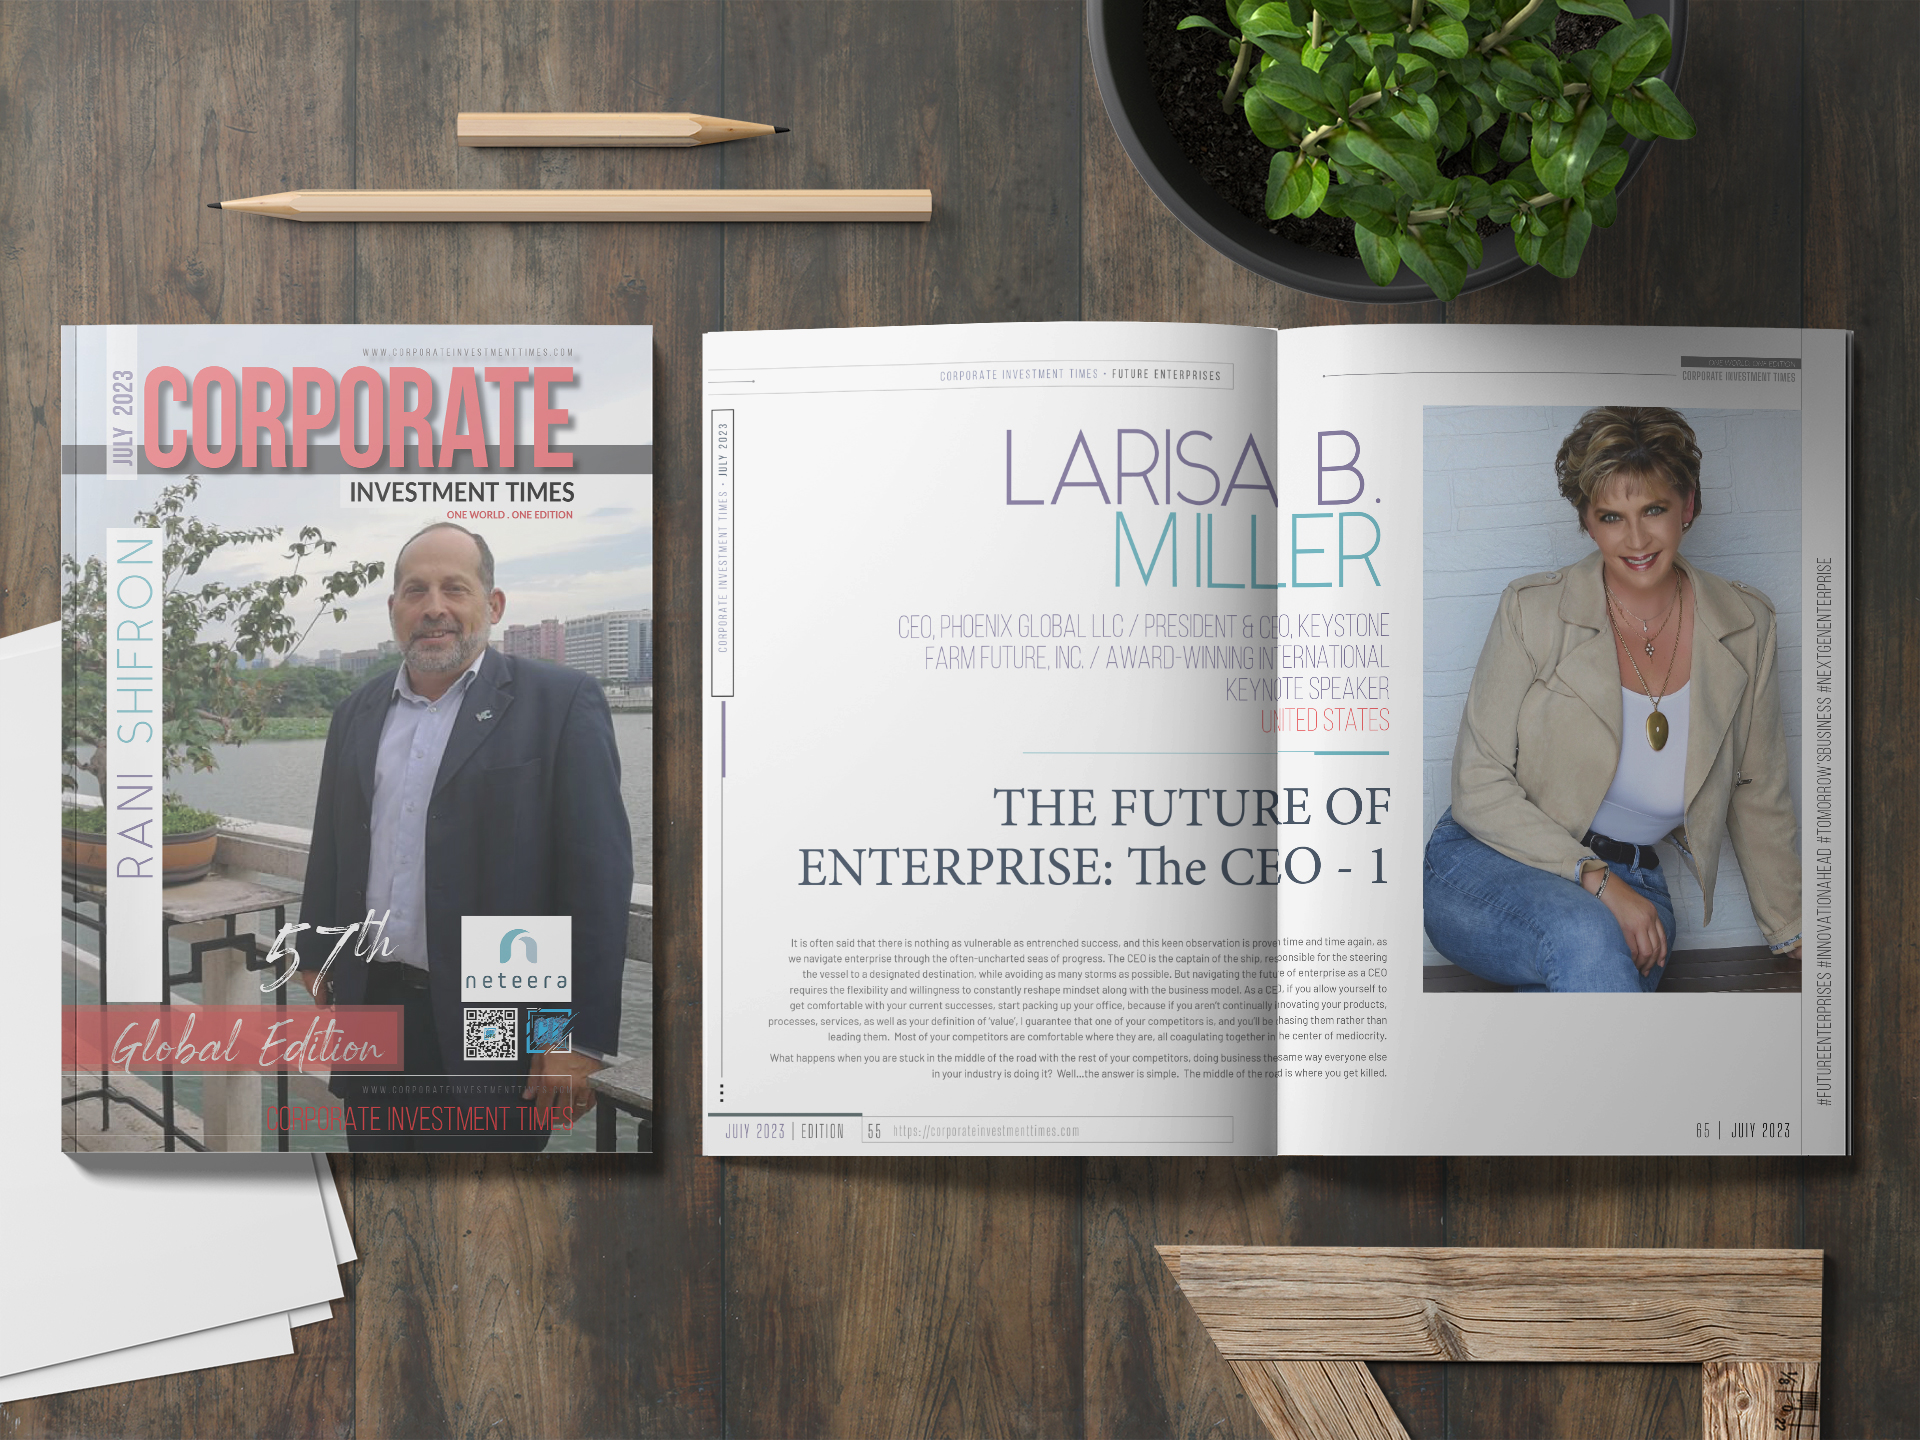 THE FUTURE OF ENTERPRISE: The CEO - 1 - Larisa B. Miller